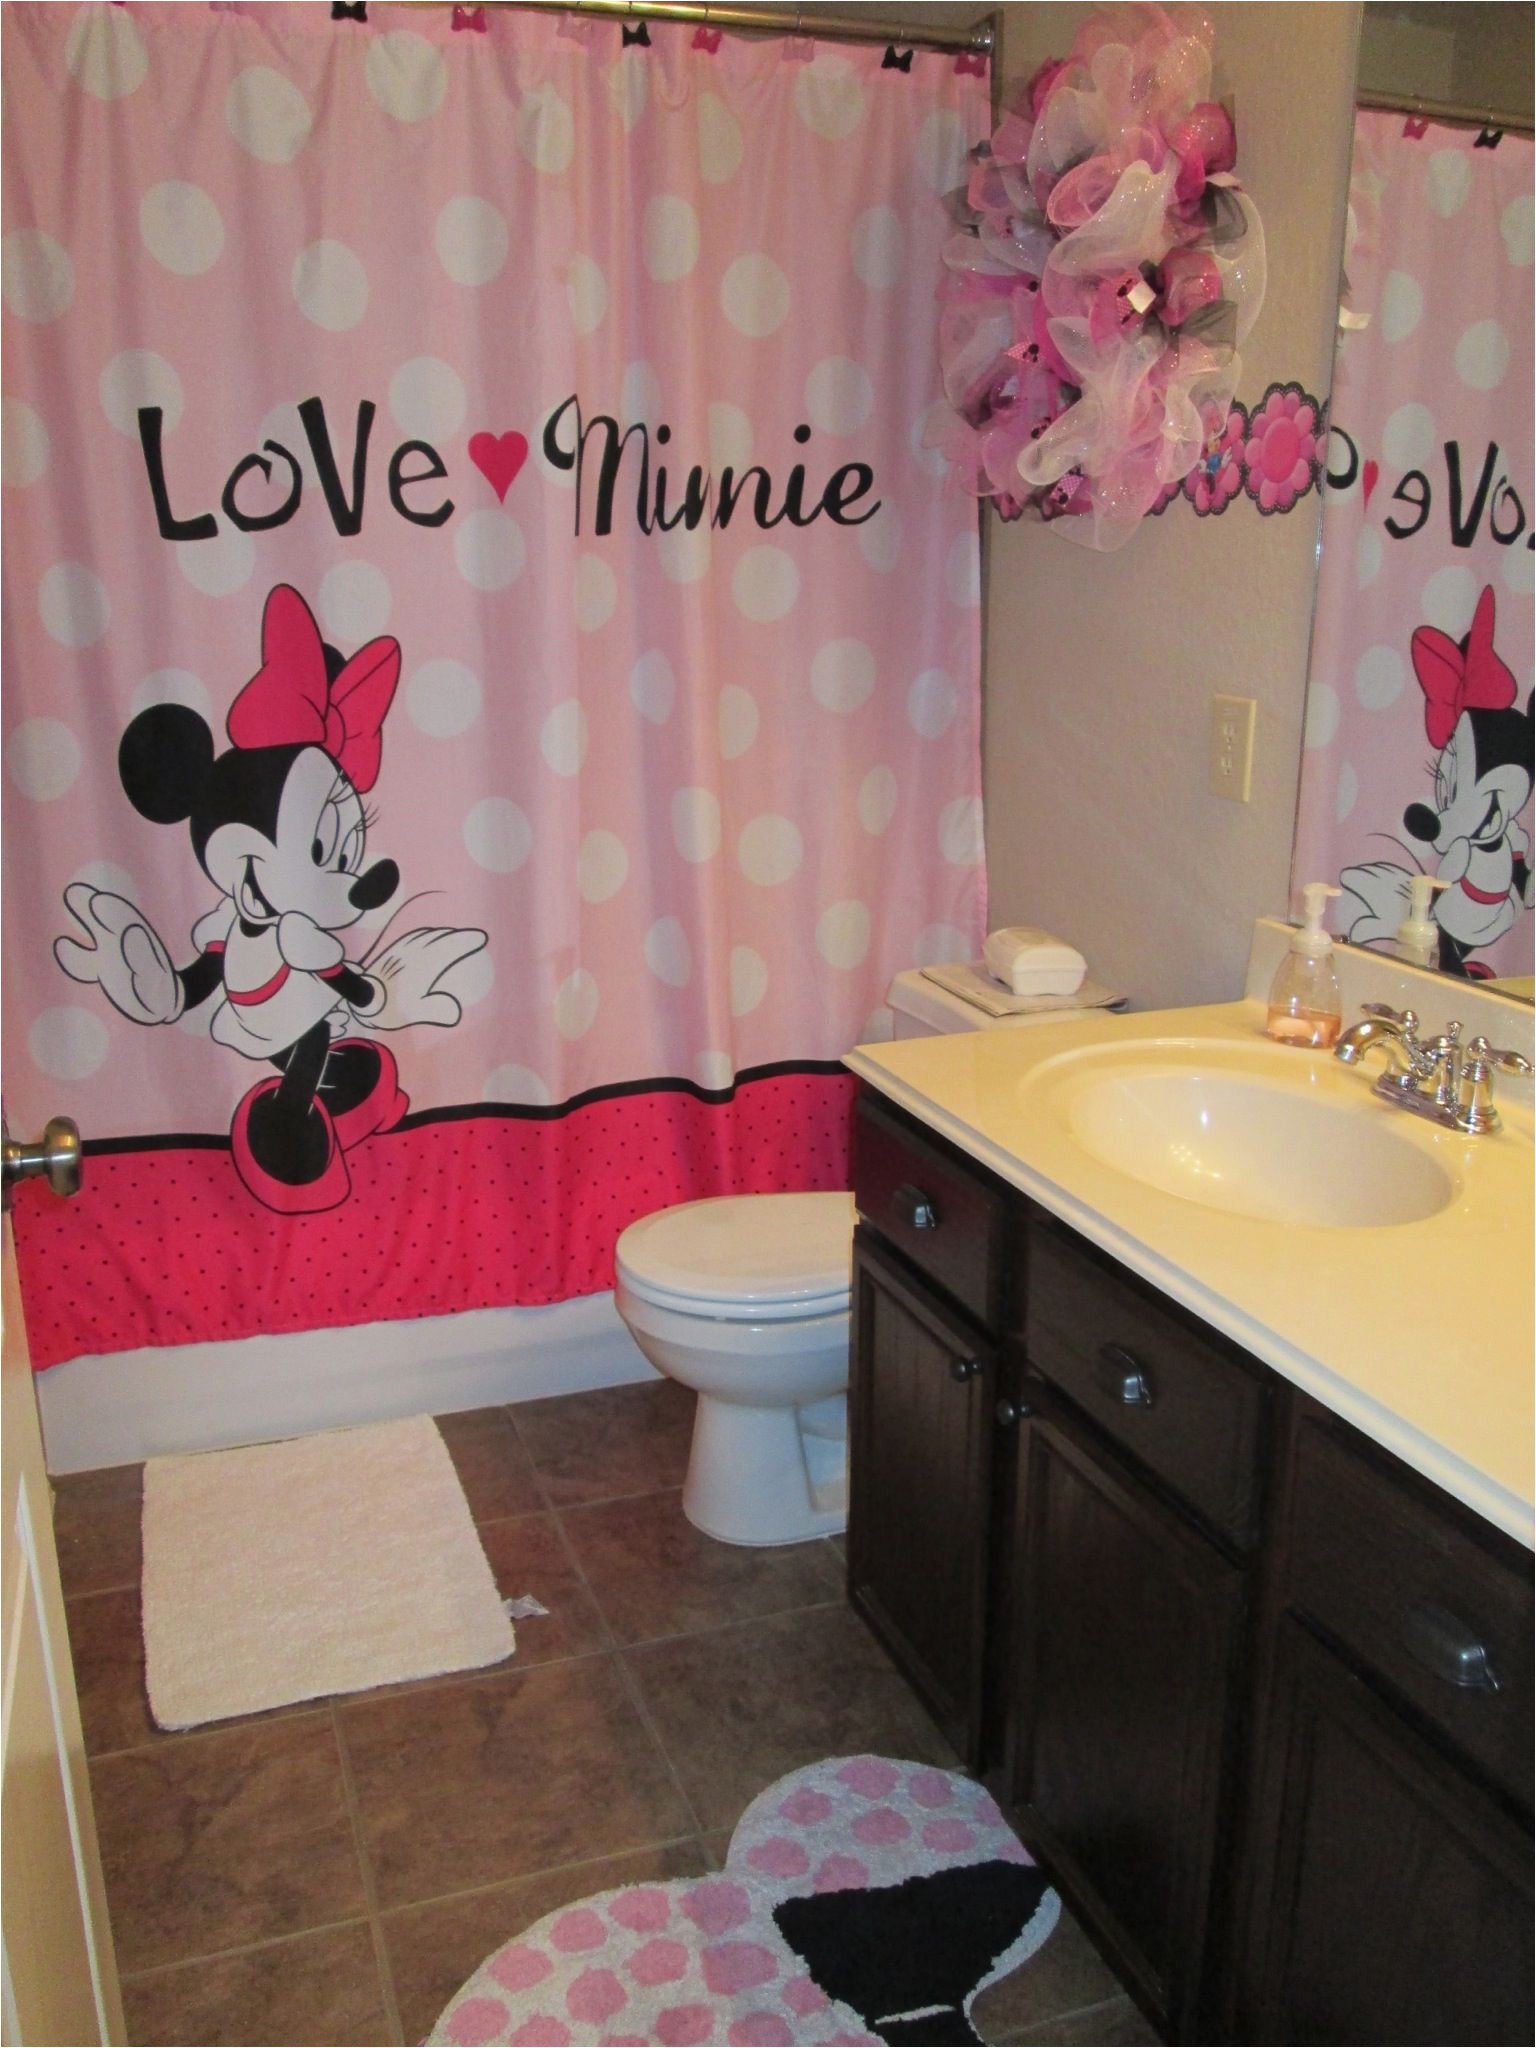 Minnie Mouse Bathroom Rug 30 Bathroom Sets Design Ideas with Magment